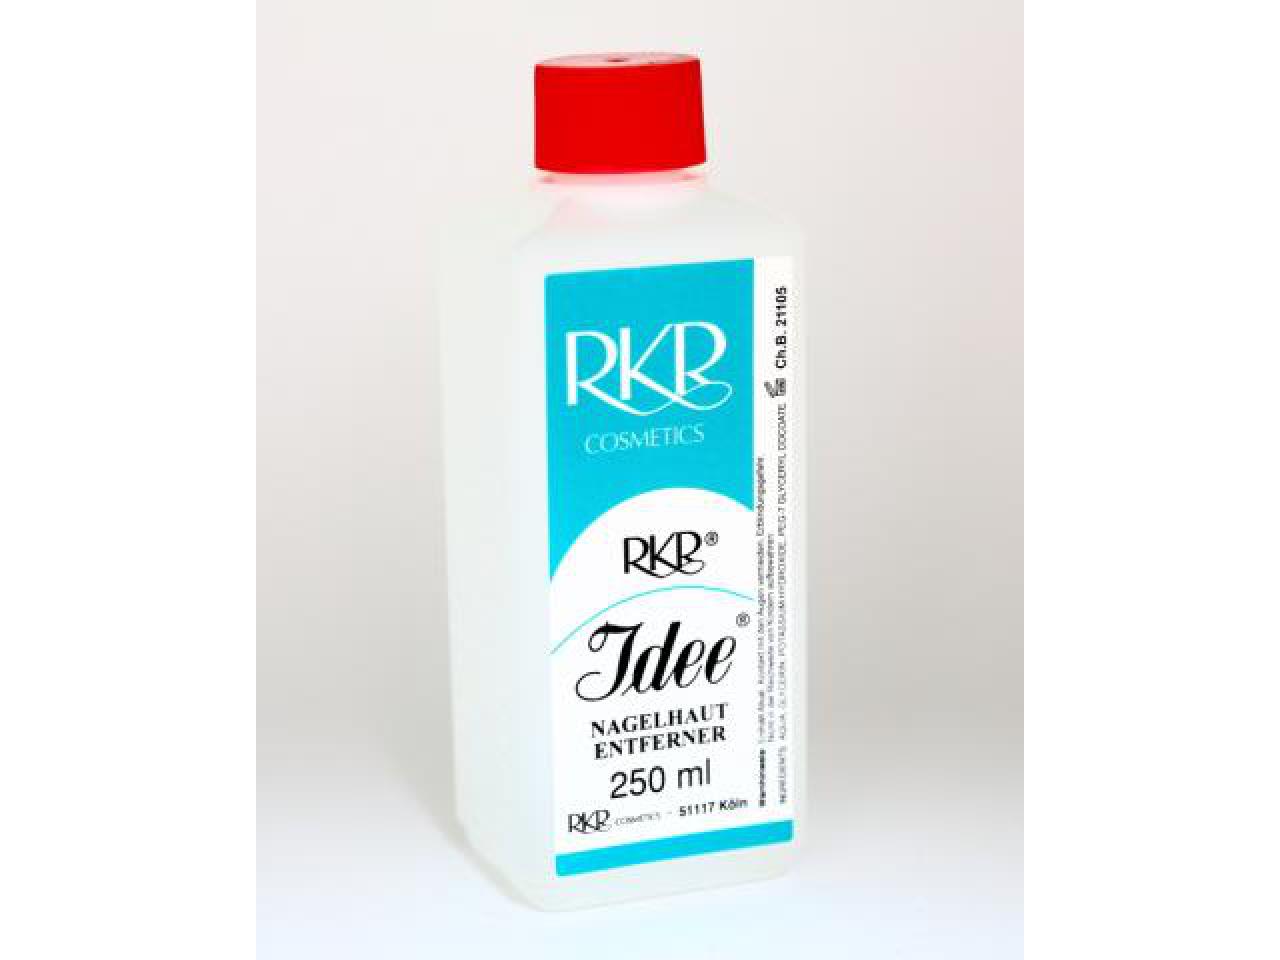 RKR Idee Nagelhautentferner - 250 ml